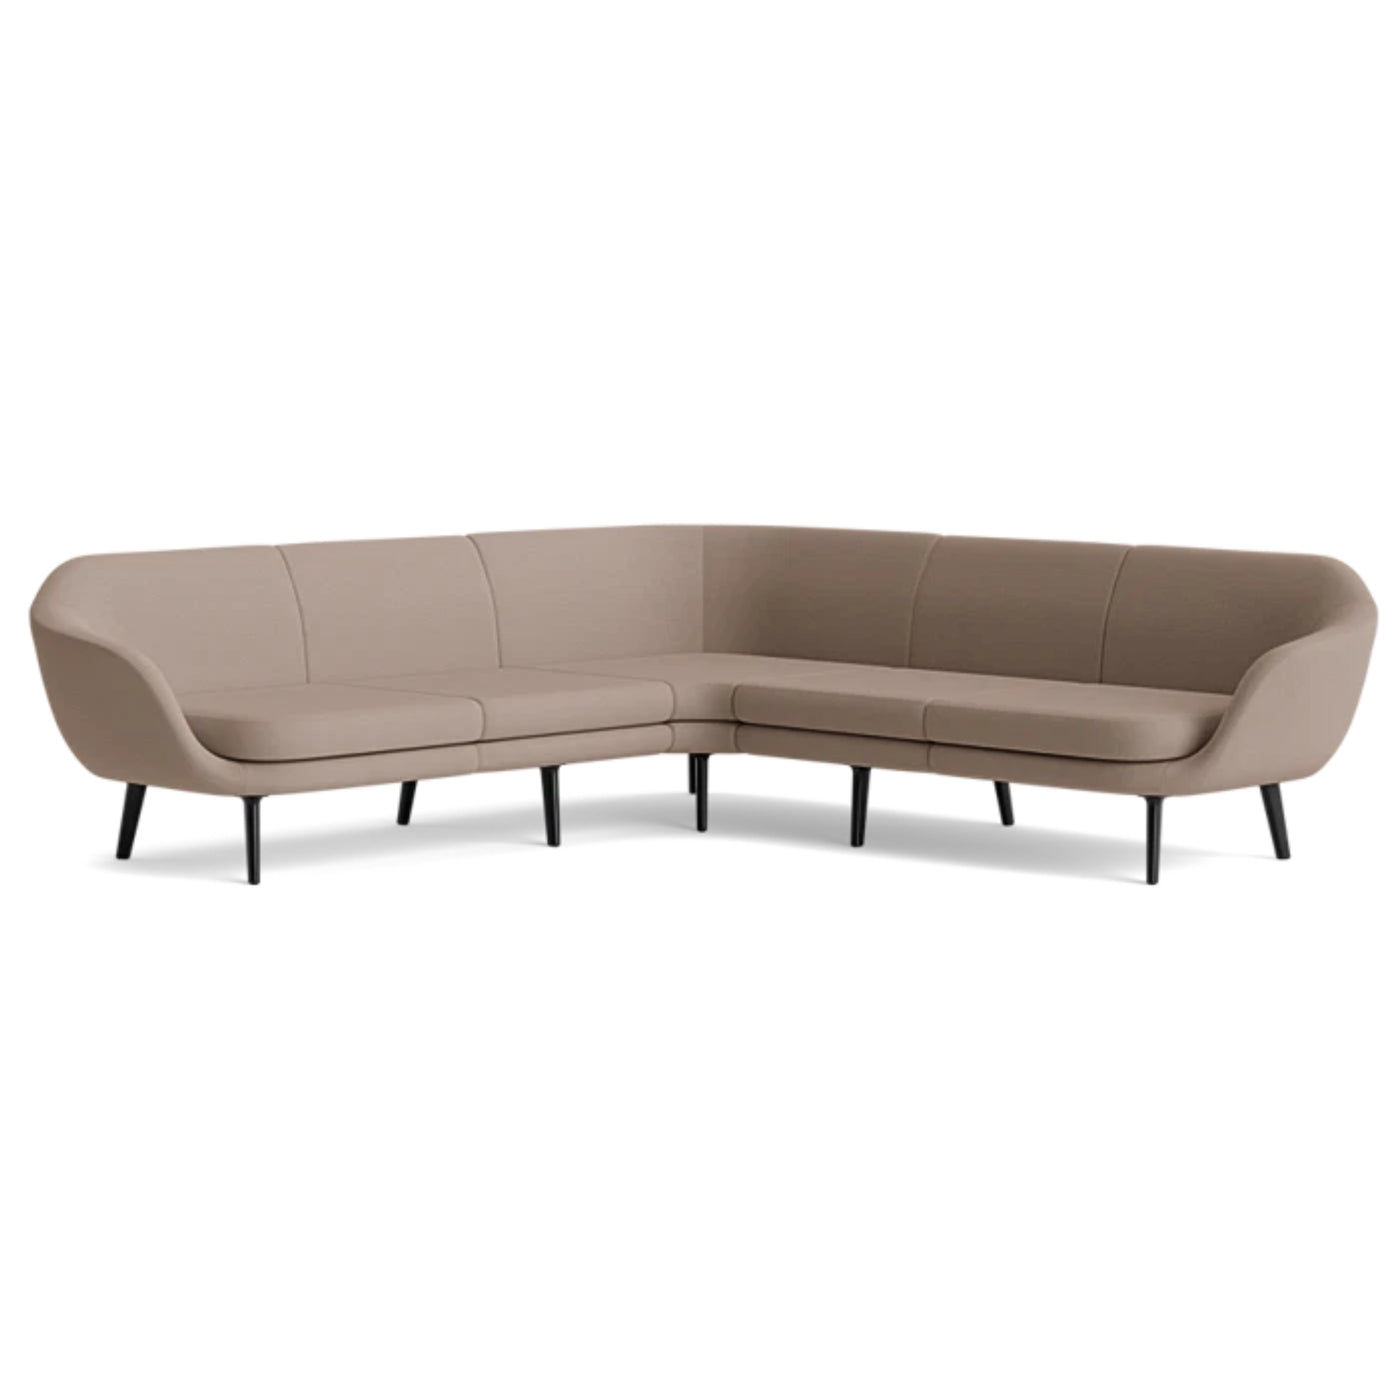 Normann Copenhagen Sum Modular Corner Sofa at someday designs. #colour_steelcut-trio-426